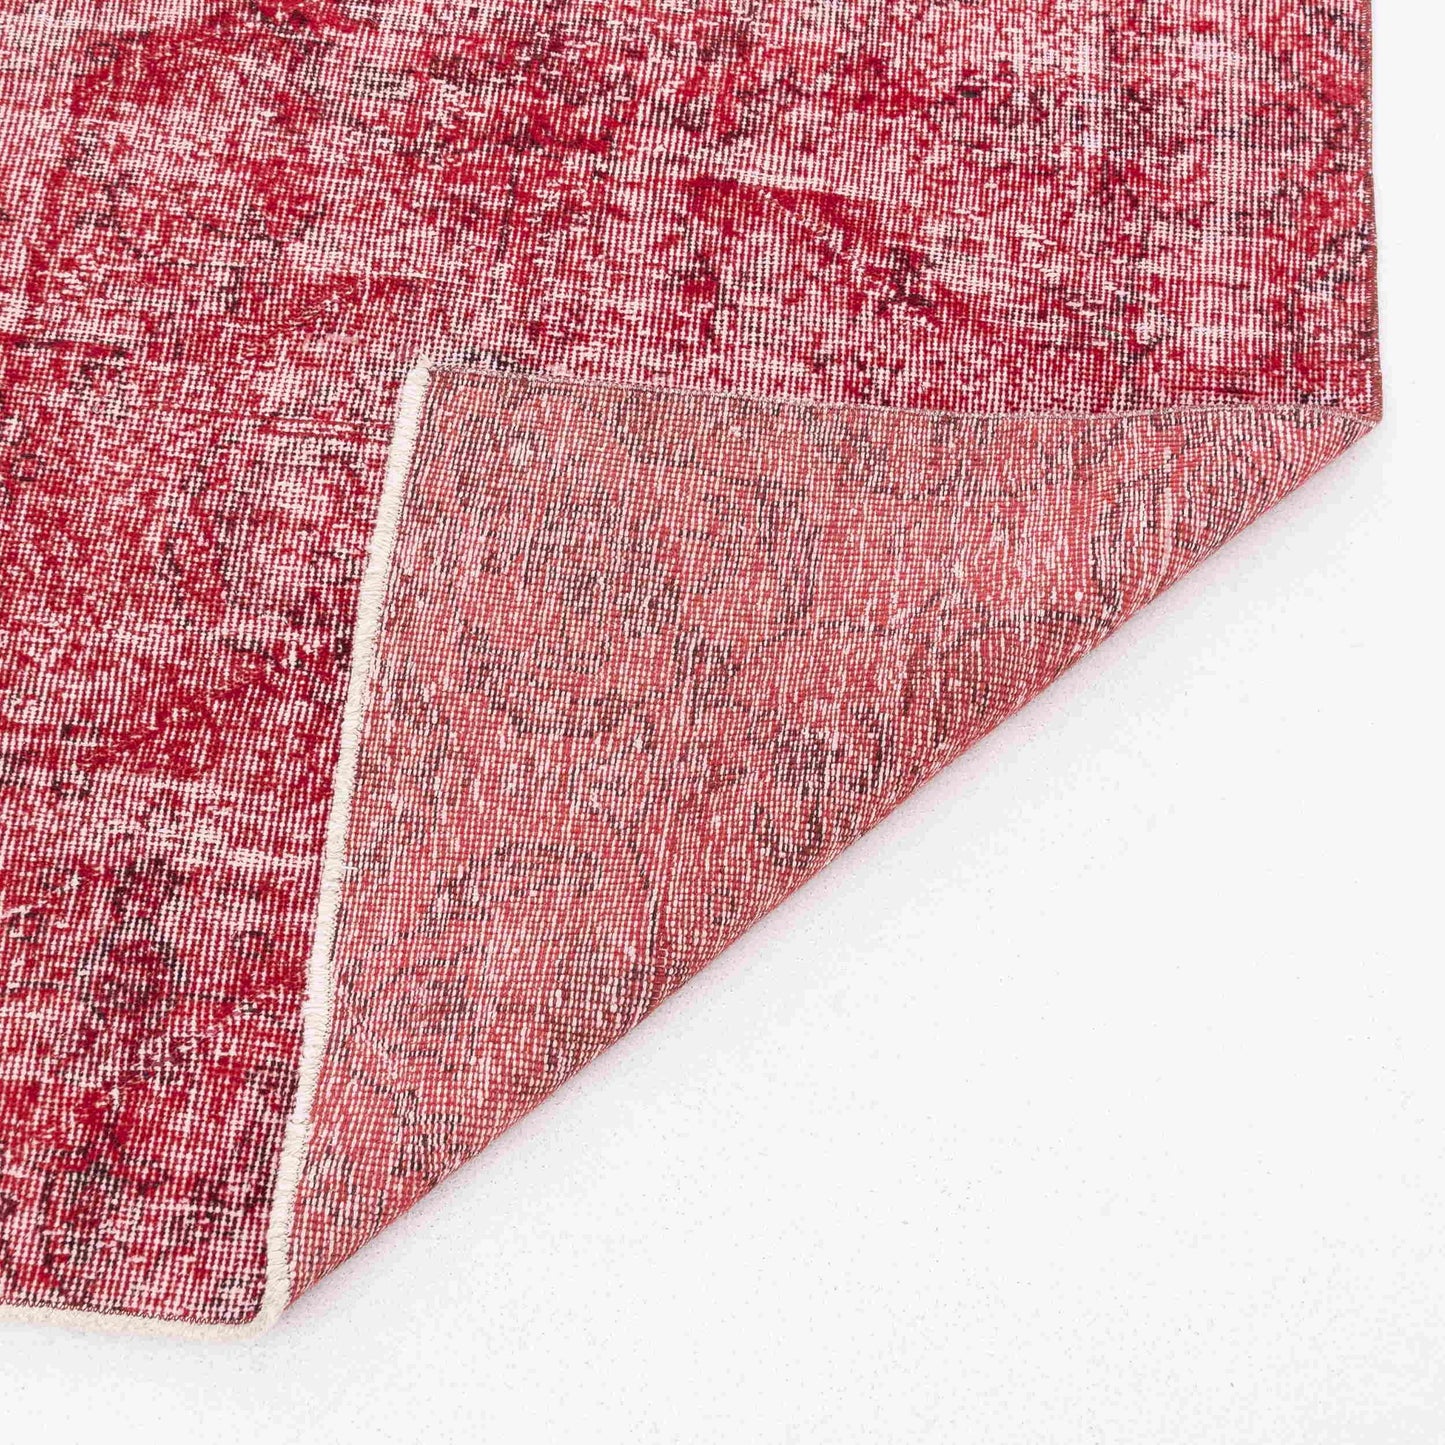 Oriental Rug Vintage Handmade Wool On Cotton 119 x 201 Cm - 3' 11'' x 6' 8'' Red C014 ER01